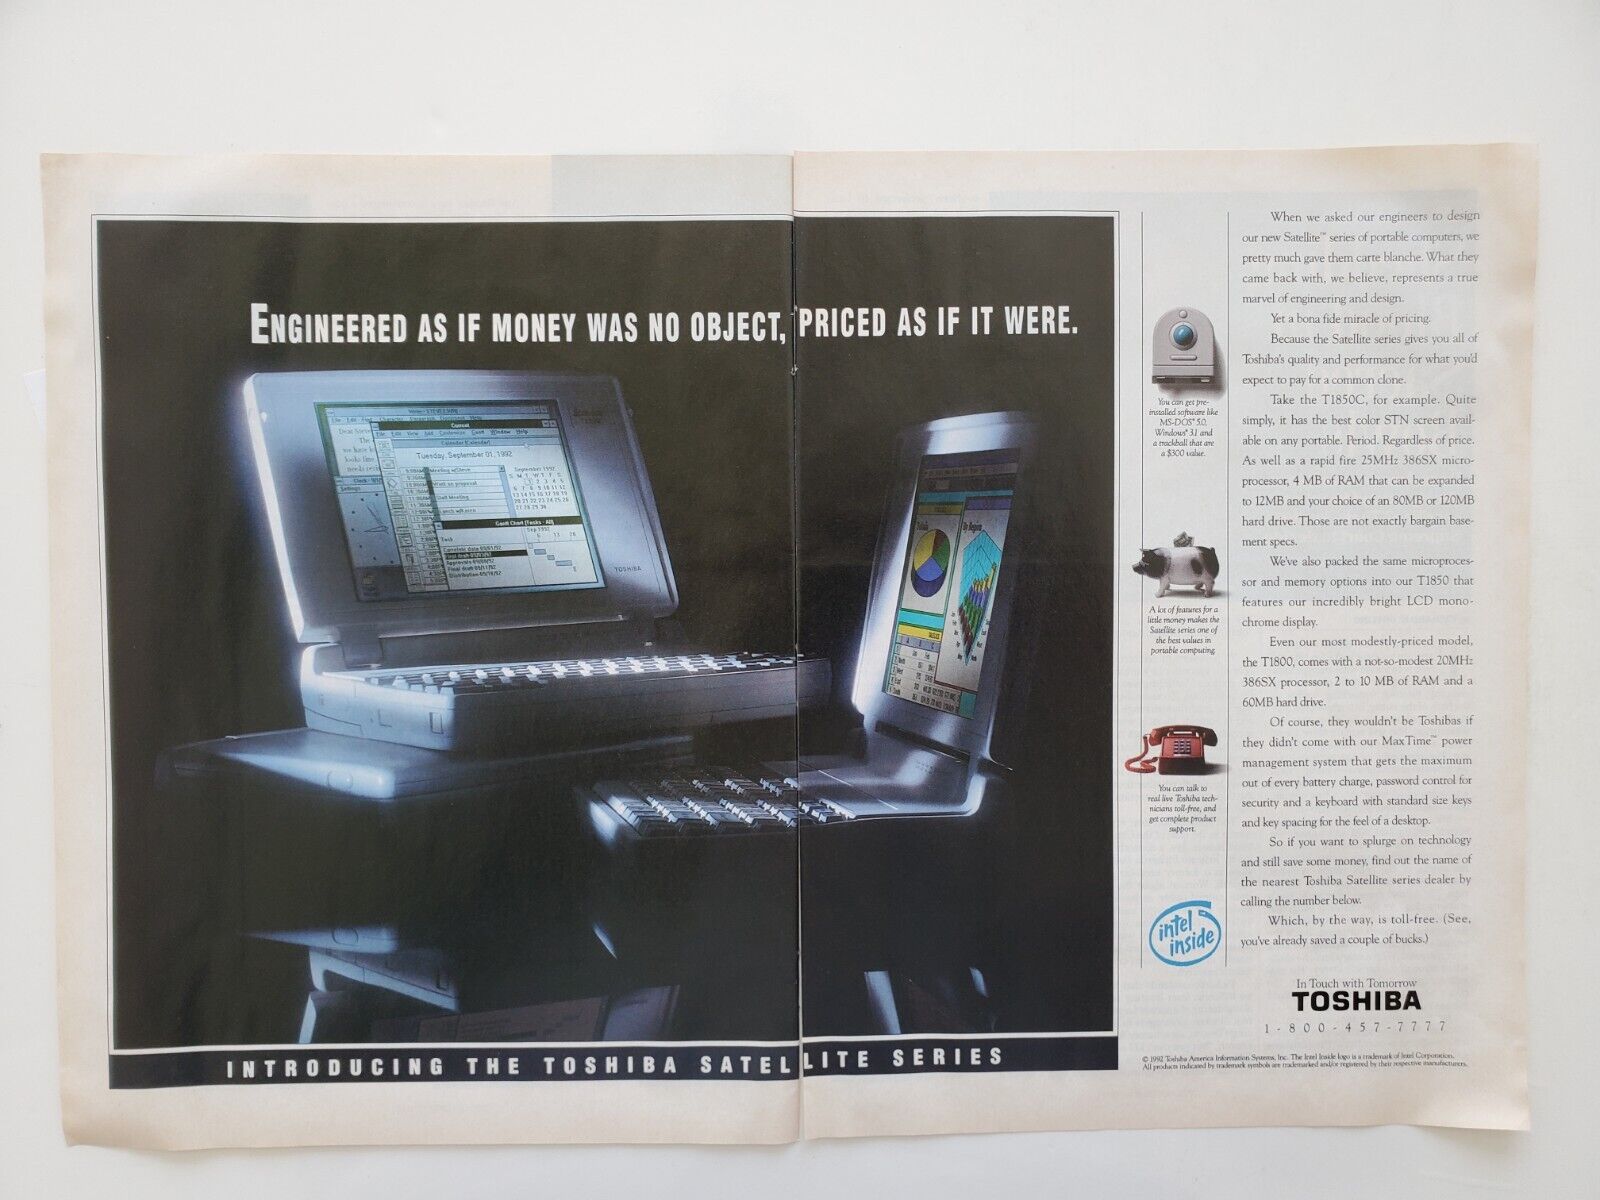 Toshiba Satellite Series Portable Computers T1850C, T1800 1992 Vintage Print Ad